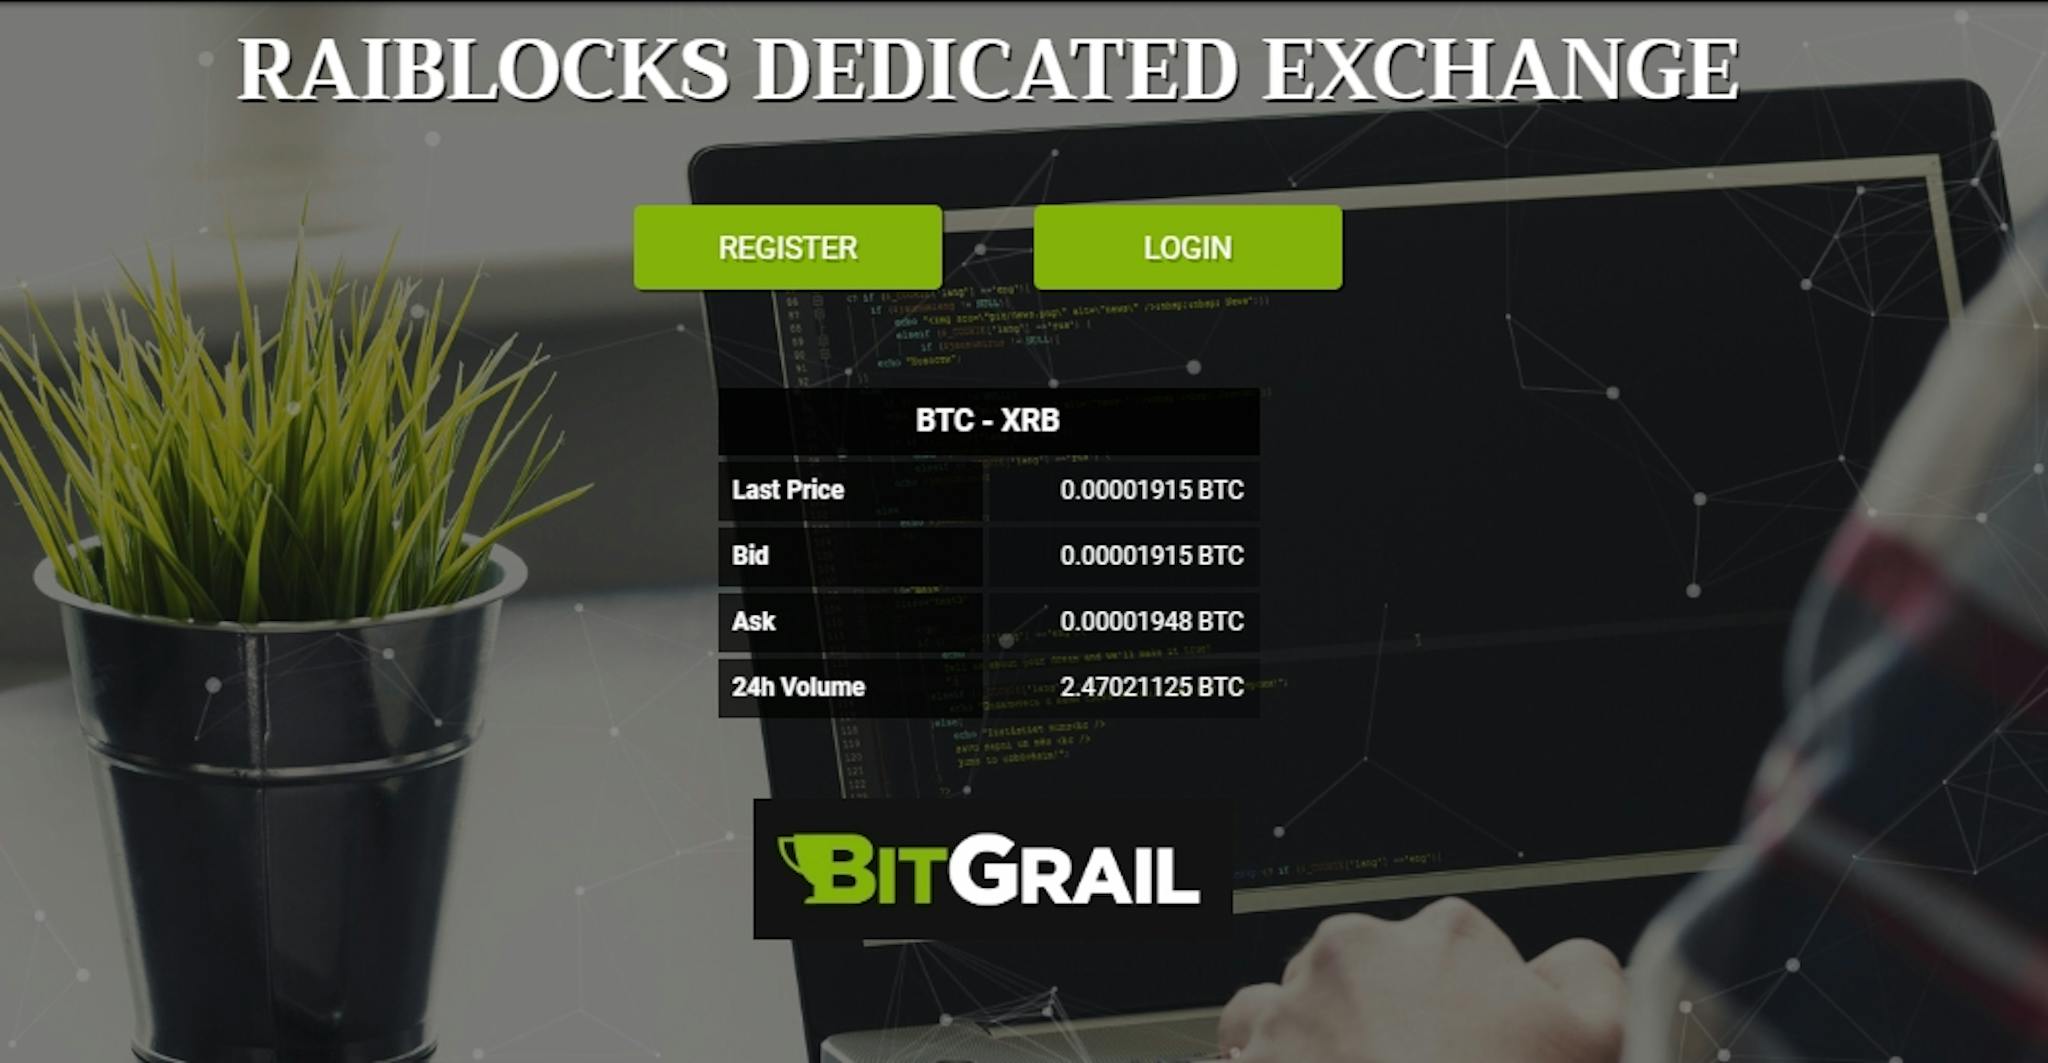 BitGrail in 2017, trading RaiBlocks (Nano). Image from Internet Archive